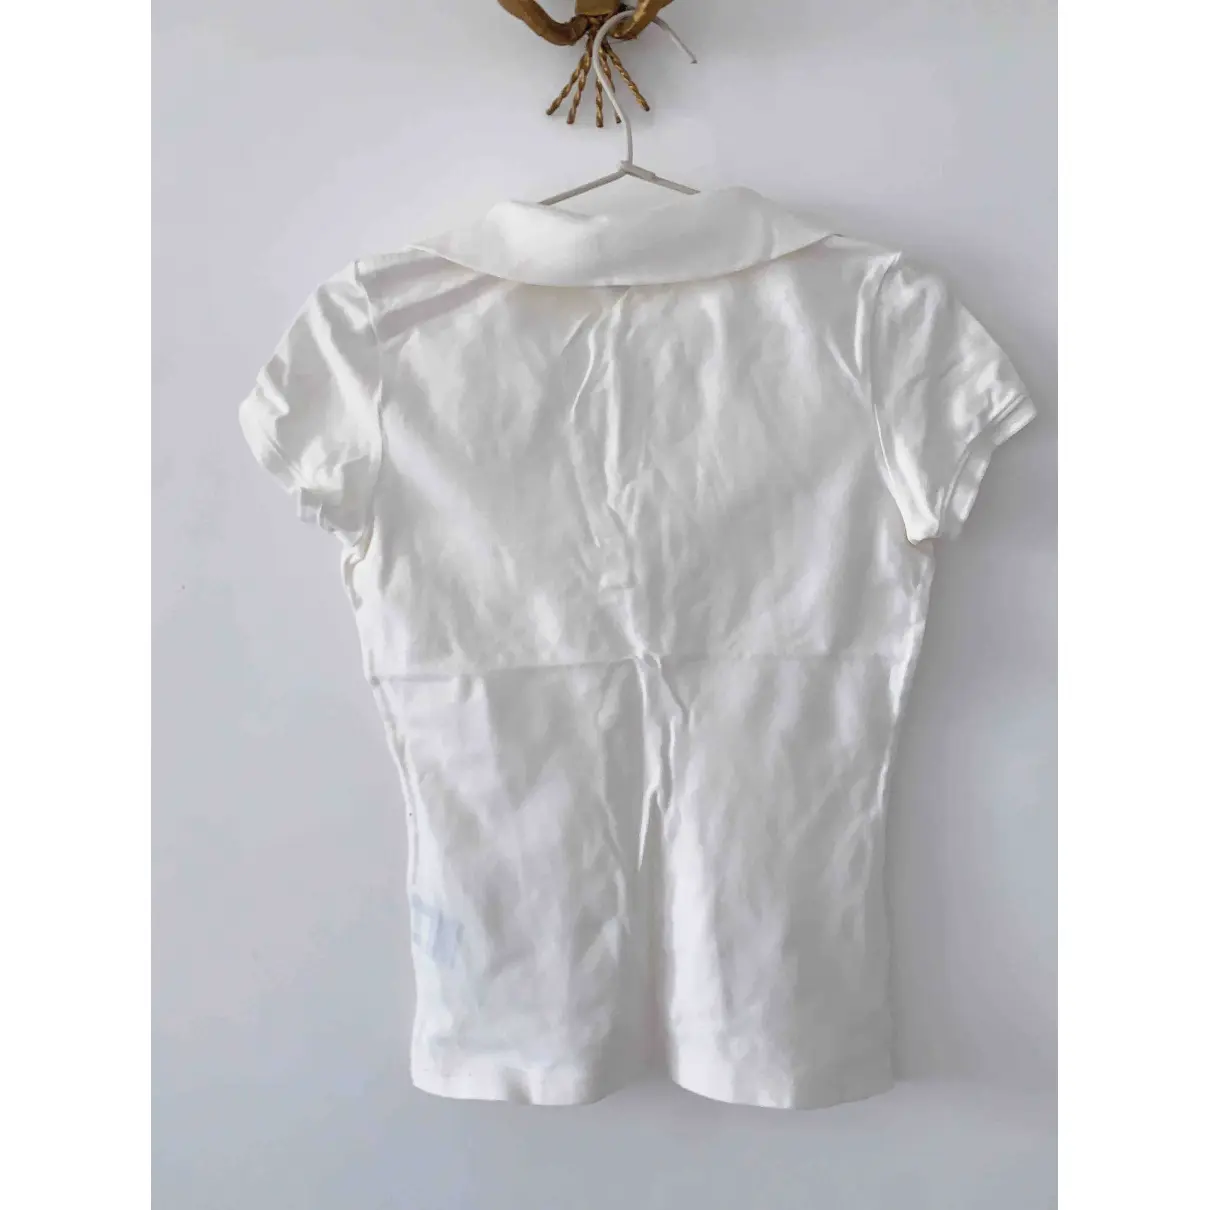 Buy Polo Ralph Lauren White Cotton Top online